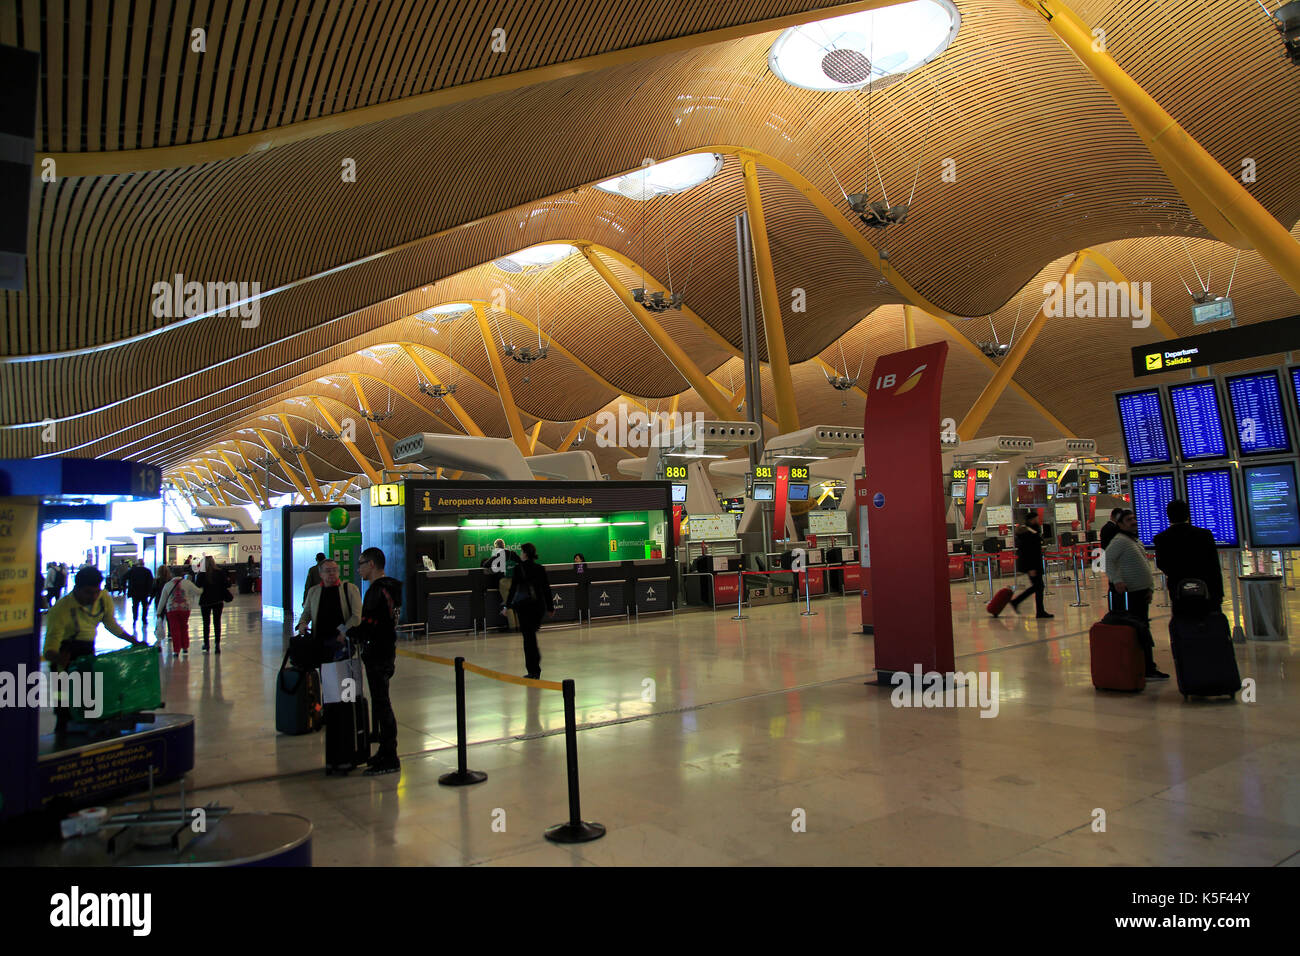 La moderna architettura interna del terminale 4 edificio, Adolfo Suárez Madrid-barajas airport, Madrid, Spagna Foto Stock